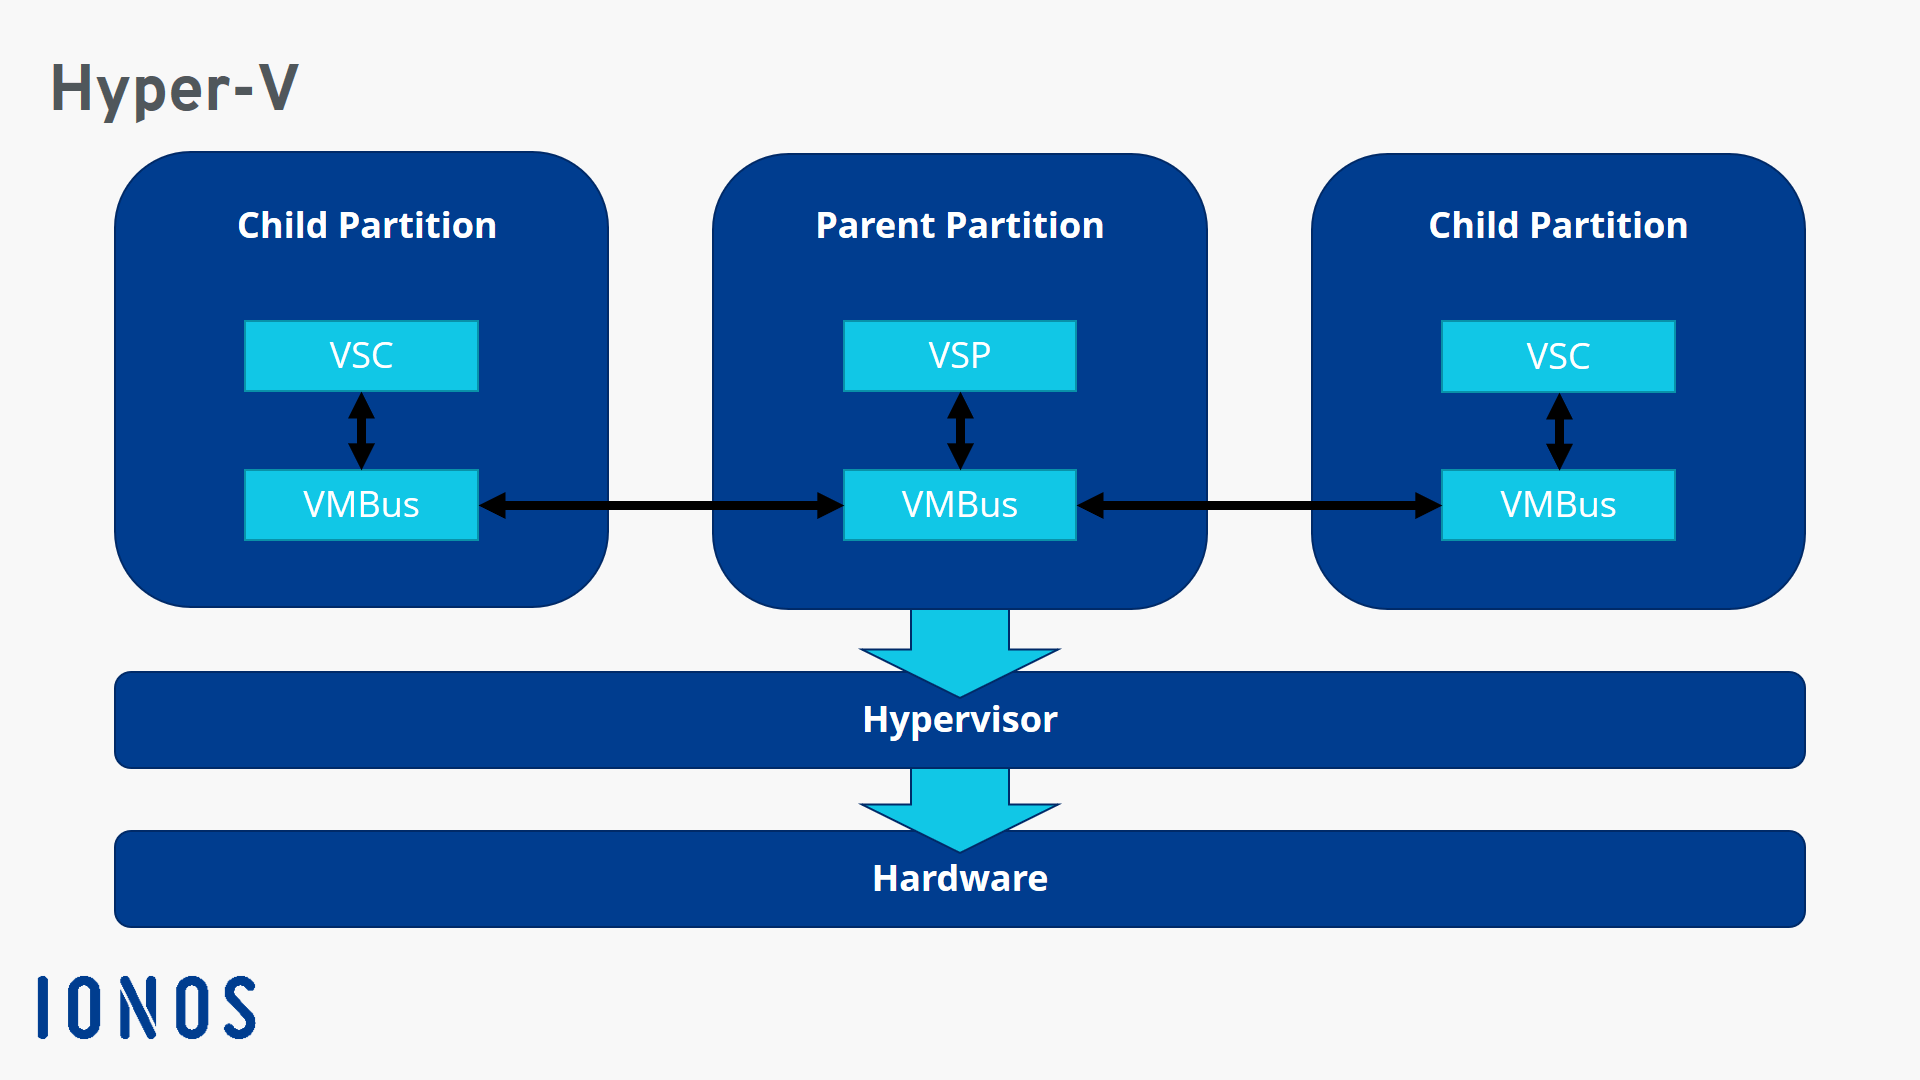 Architecture of Hyper-V